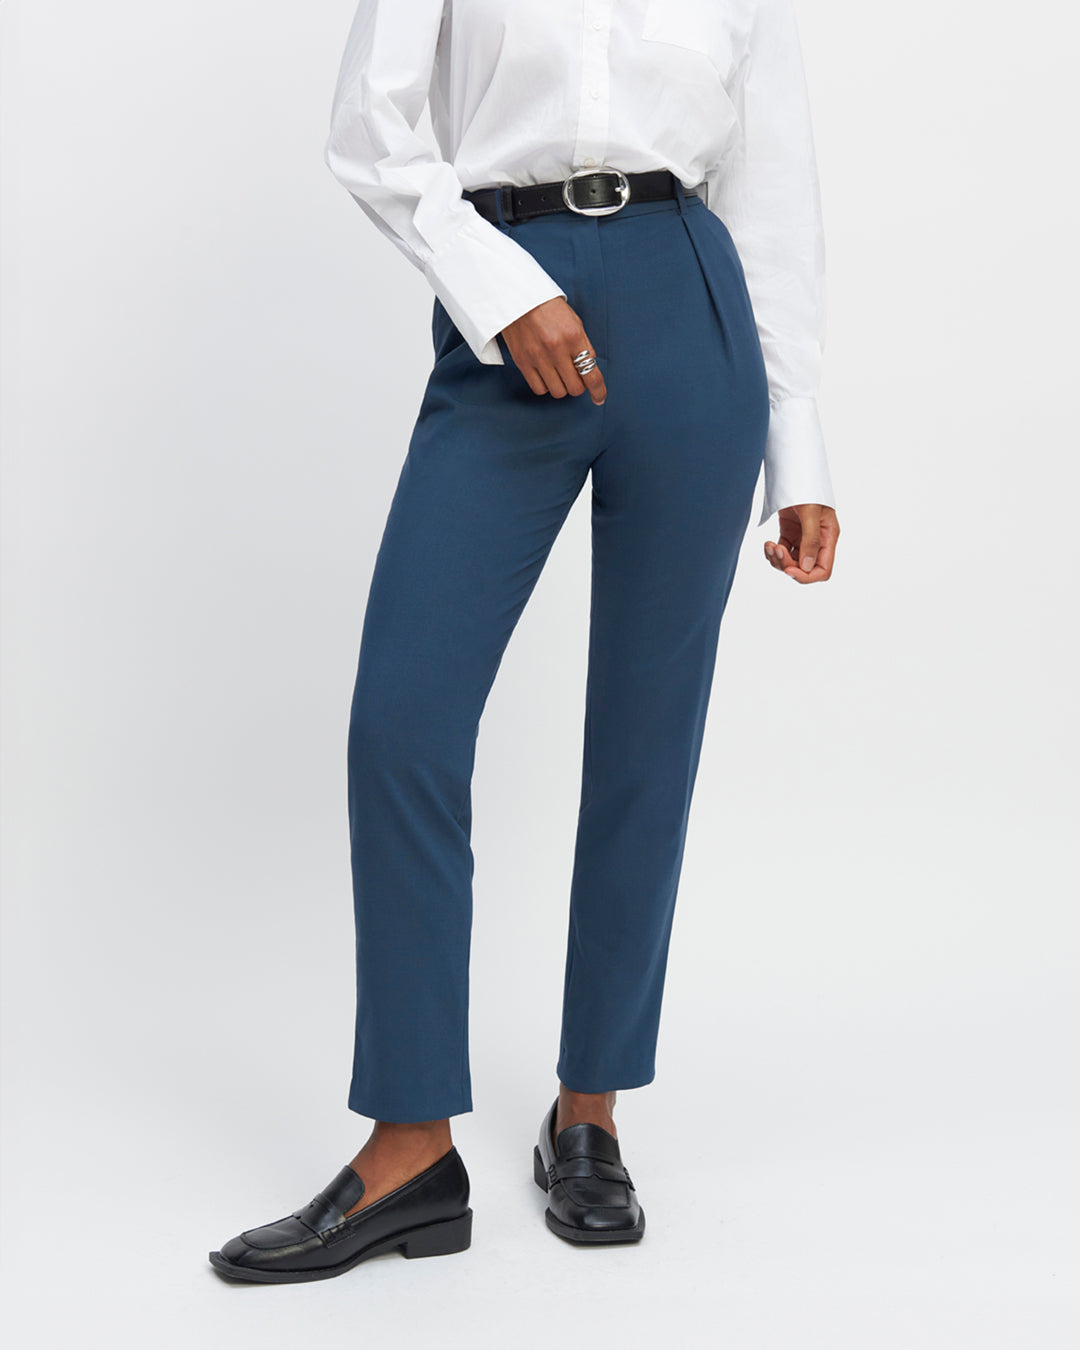 Tailored trousers-blue-grey-Cut-7-8th-waist-high-Ply-under-belt-Two-pockets-Italian-belt-assorted-tone-on-tone-17H10-tailored-trousers-for-women-paris-